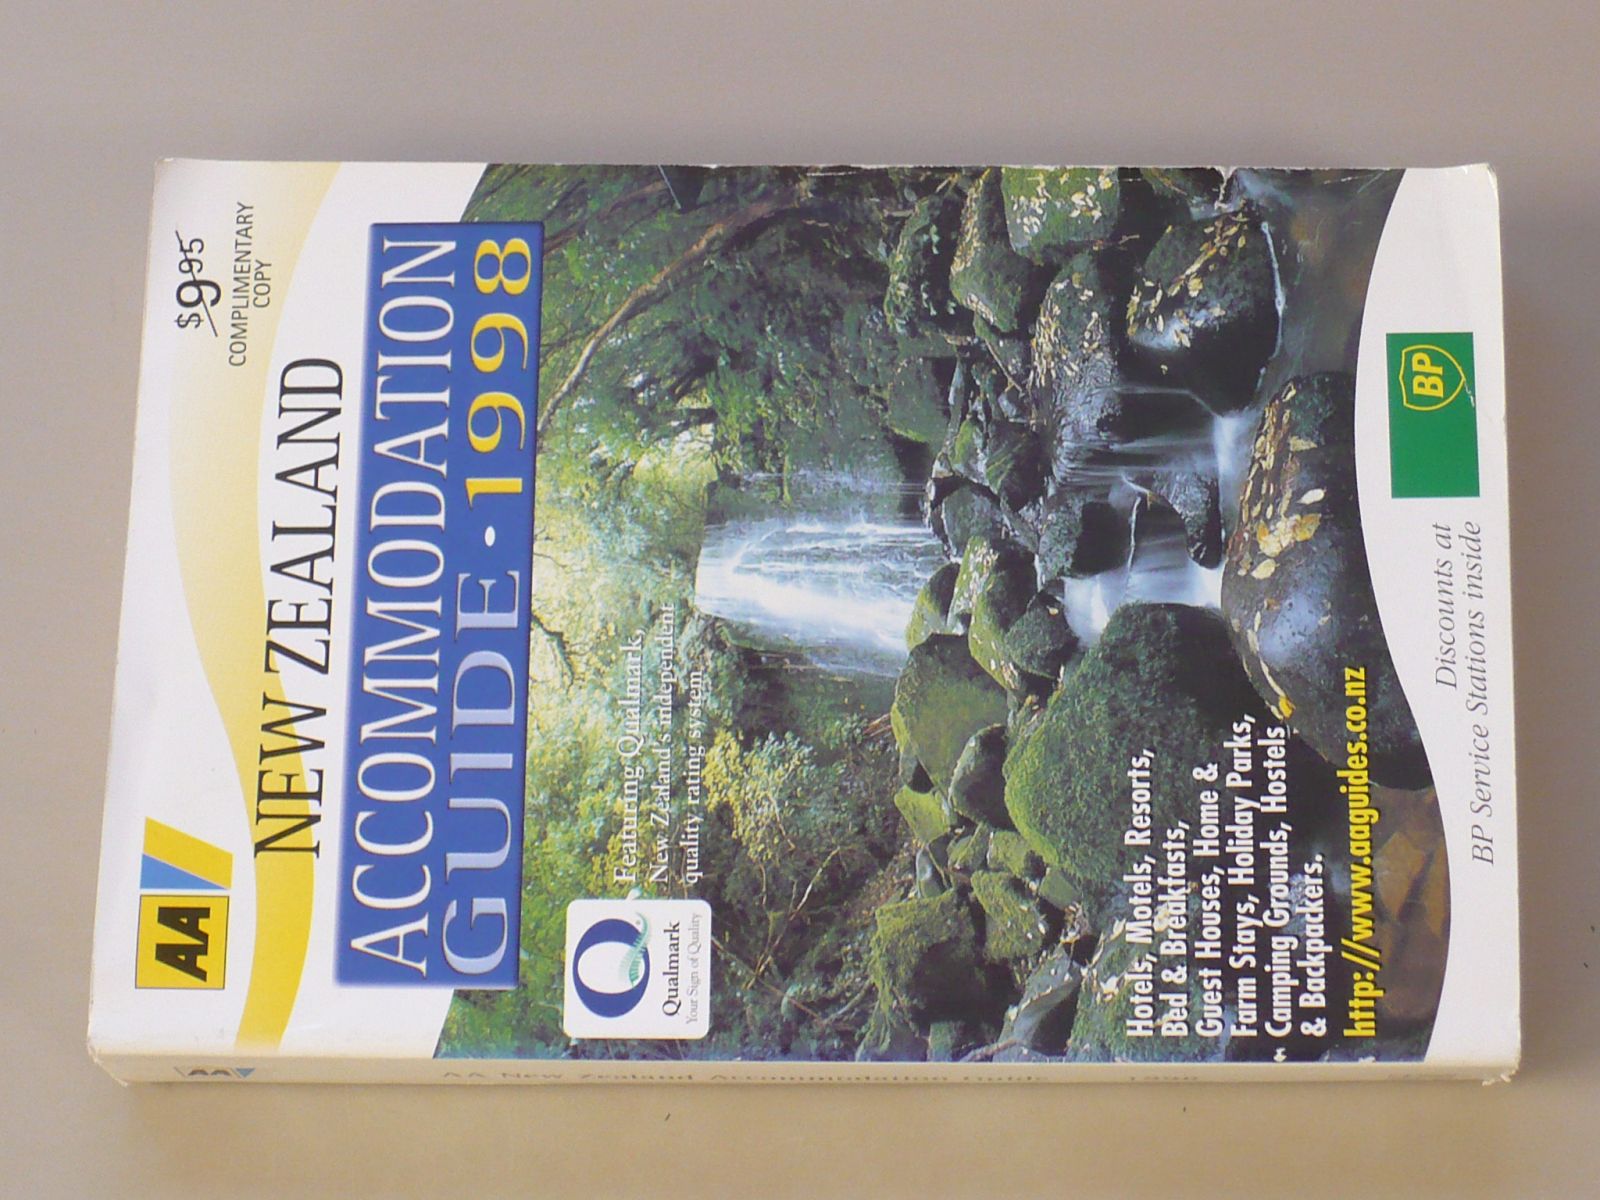 New Zealand - Accommodation guide (1997)